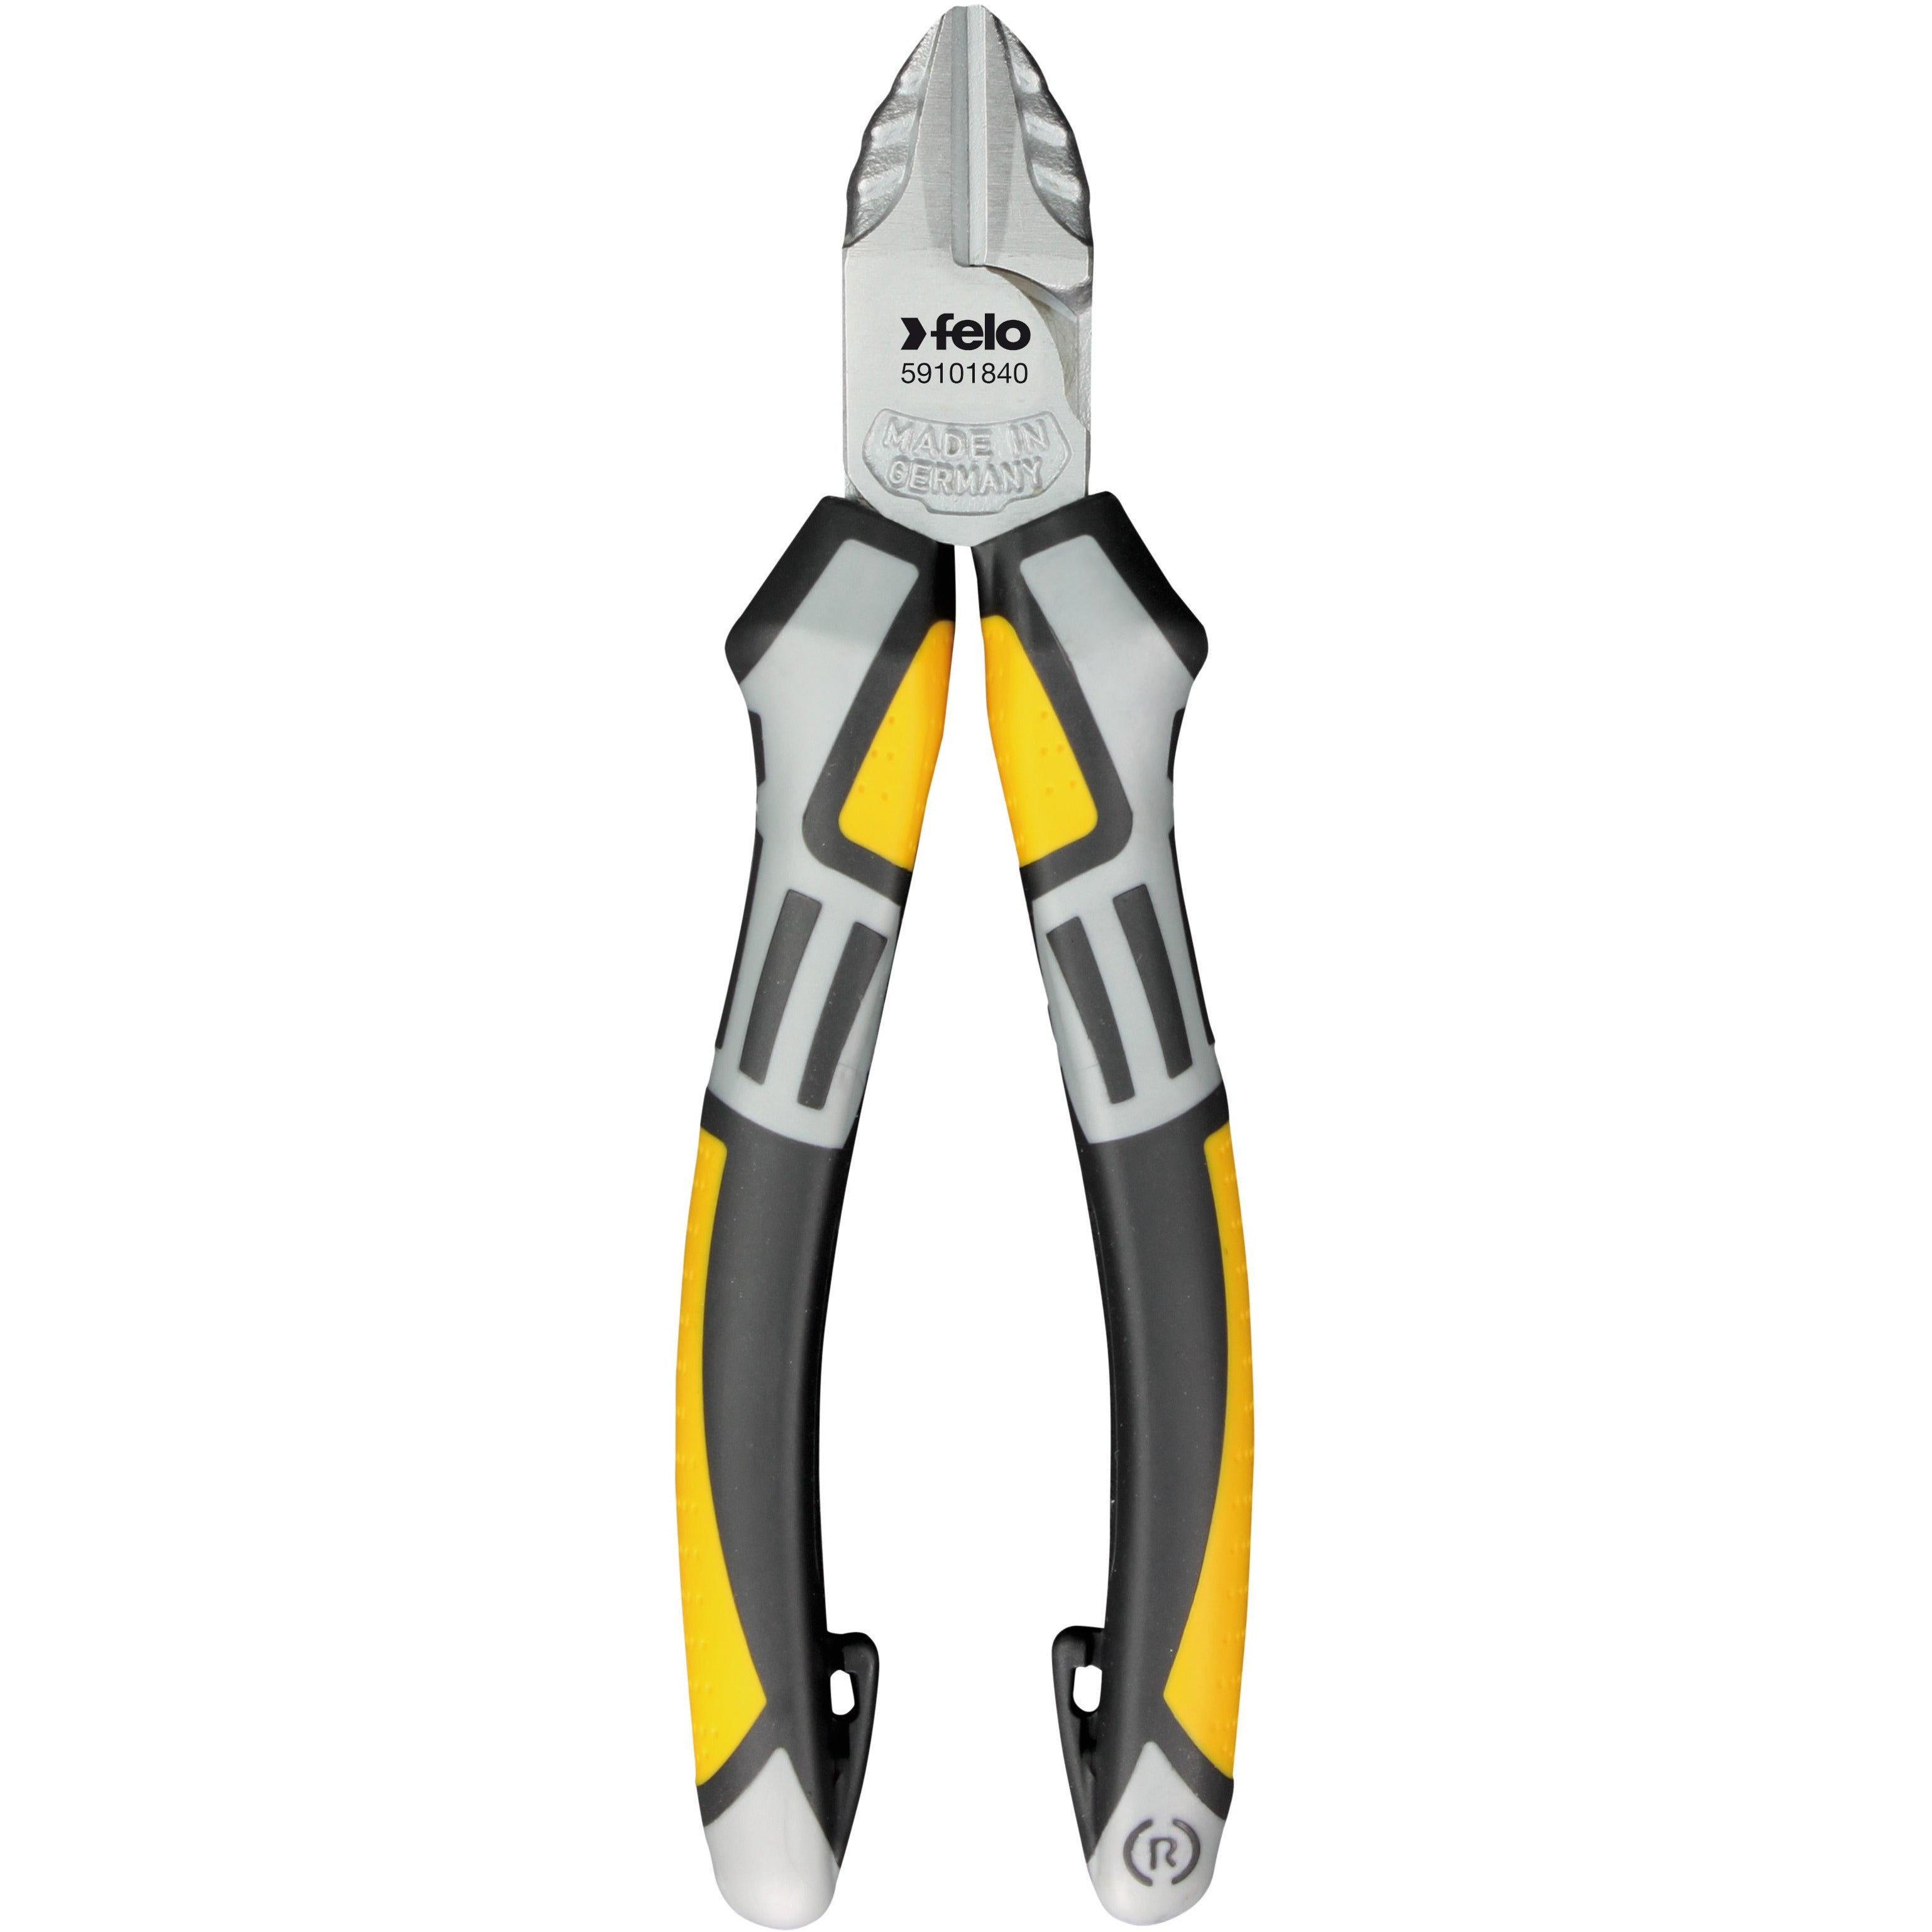 Felo Diagonal Nippers 180mm-Hand Tools-Tool Factory